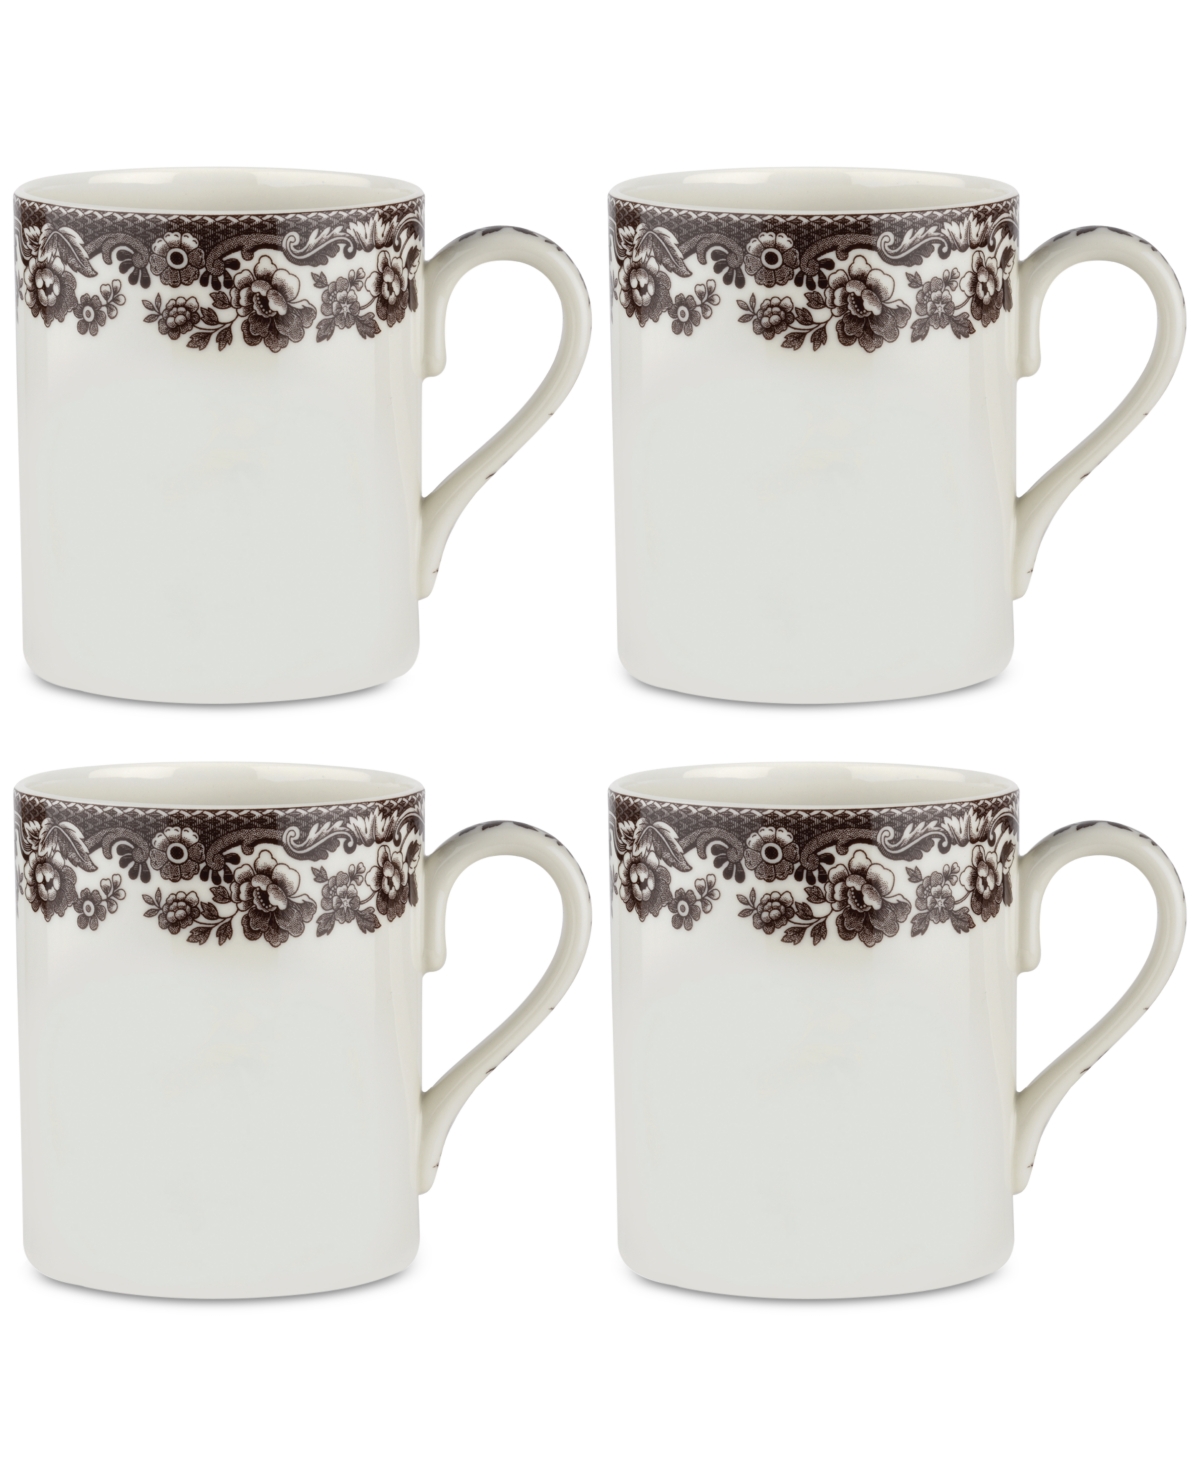 Delamere Mugs, Set of 4 - Brown